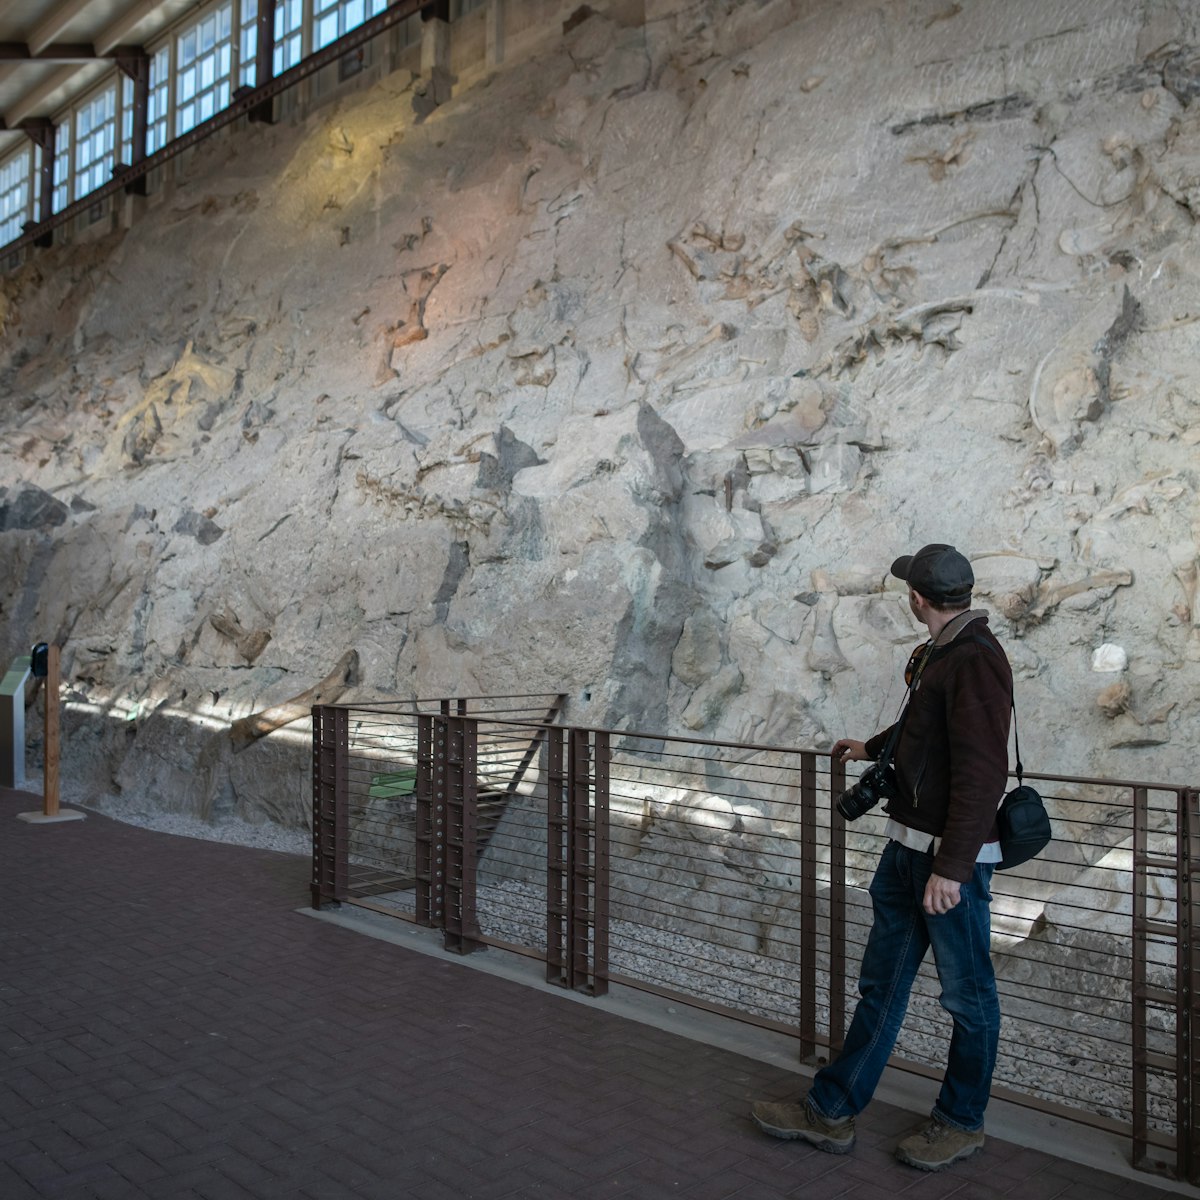 Quarry Exhibit Hall at Dinosaur National Monument.